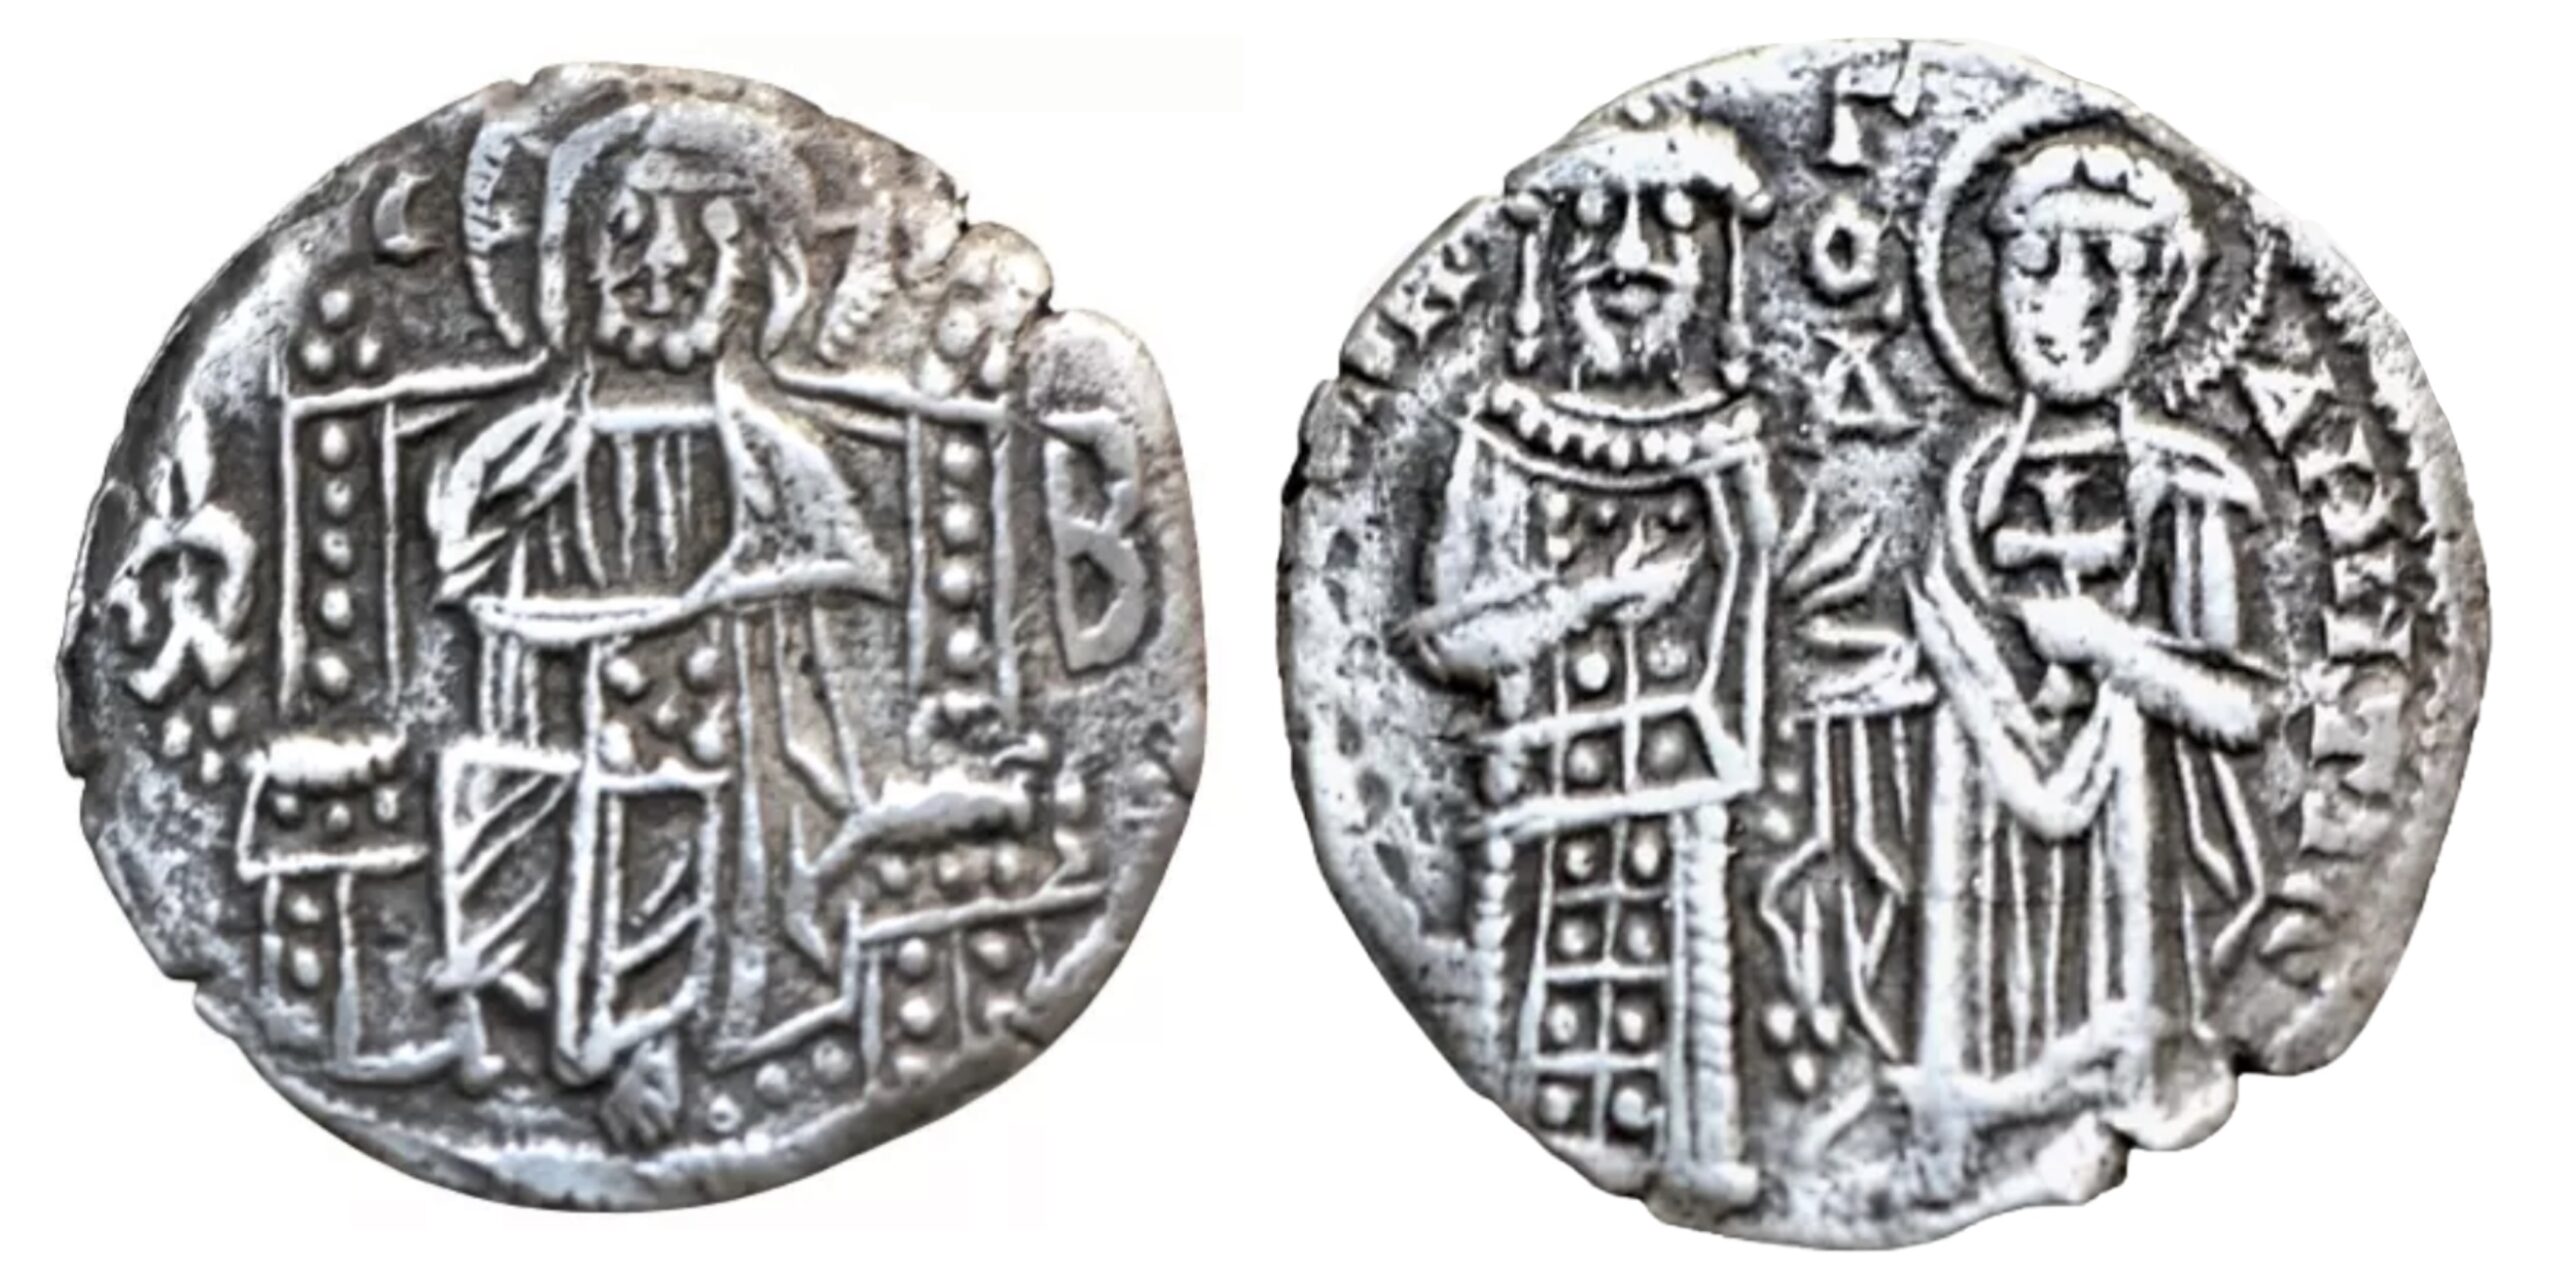 SB 2472 Basilikon of Andronikos III main image